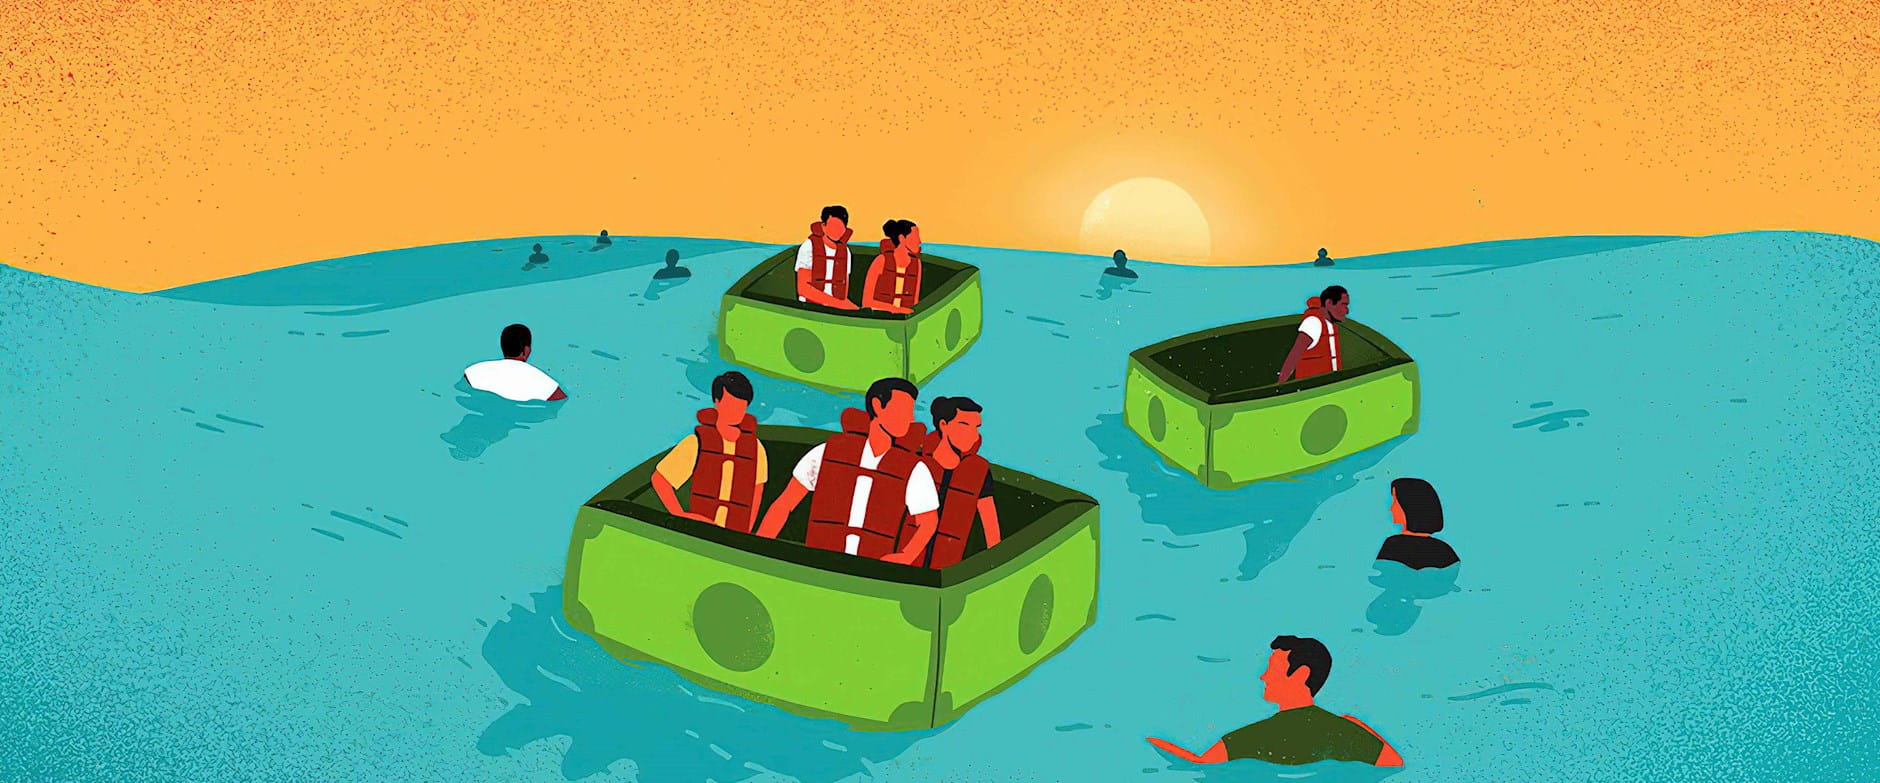 People in dollar bill life rafts